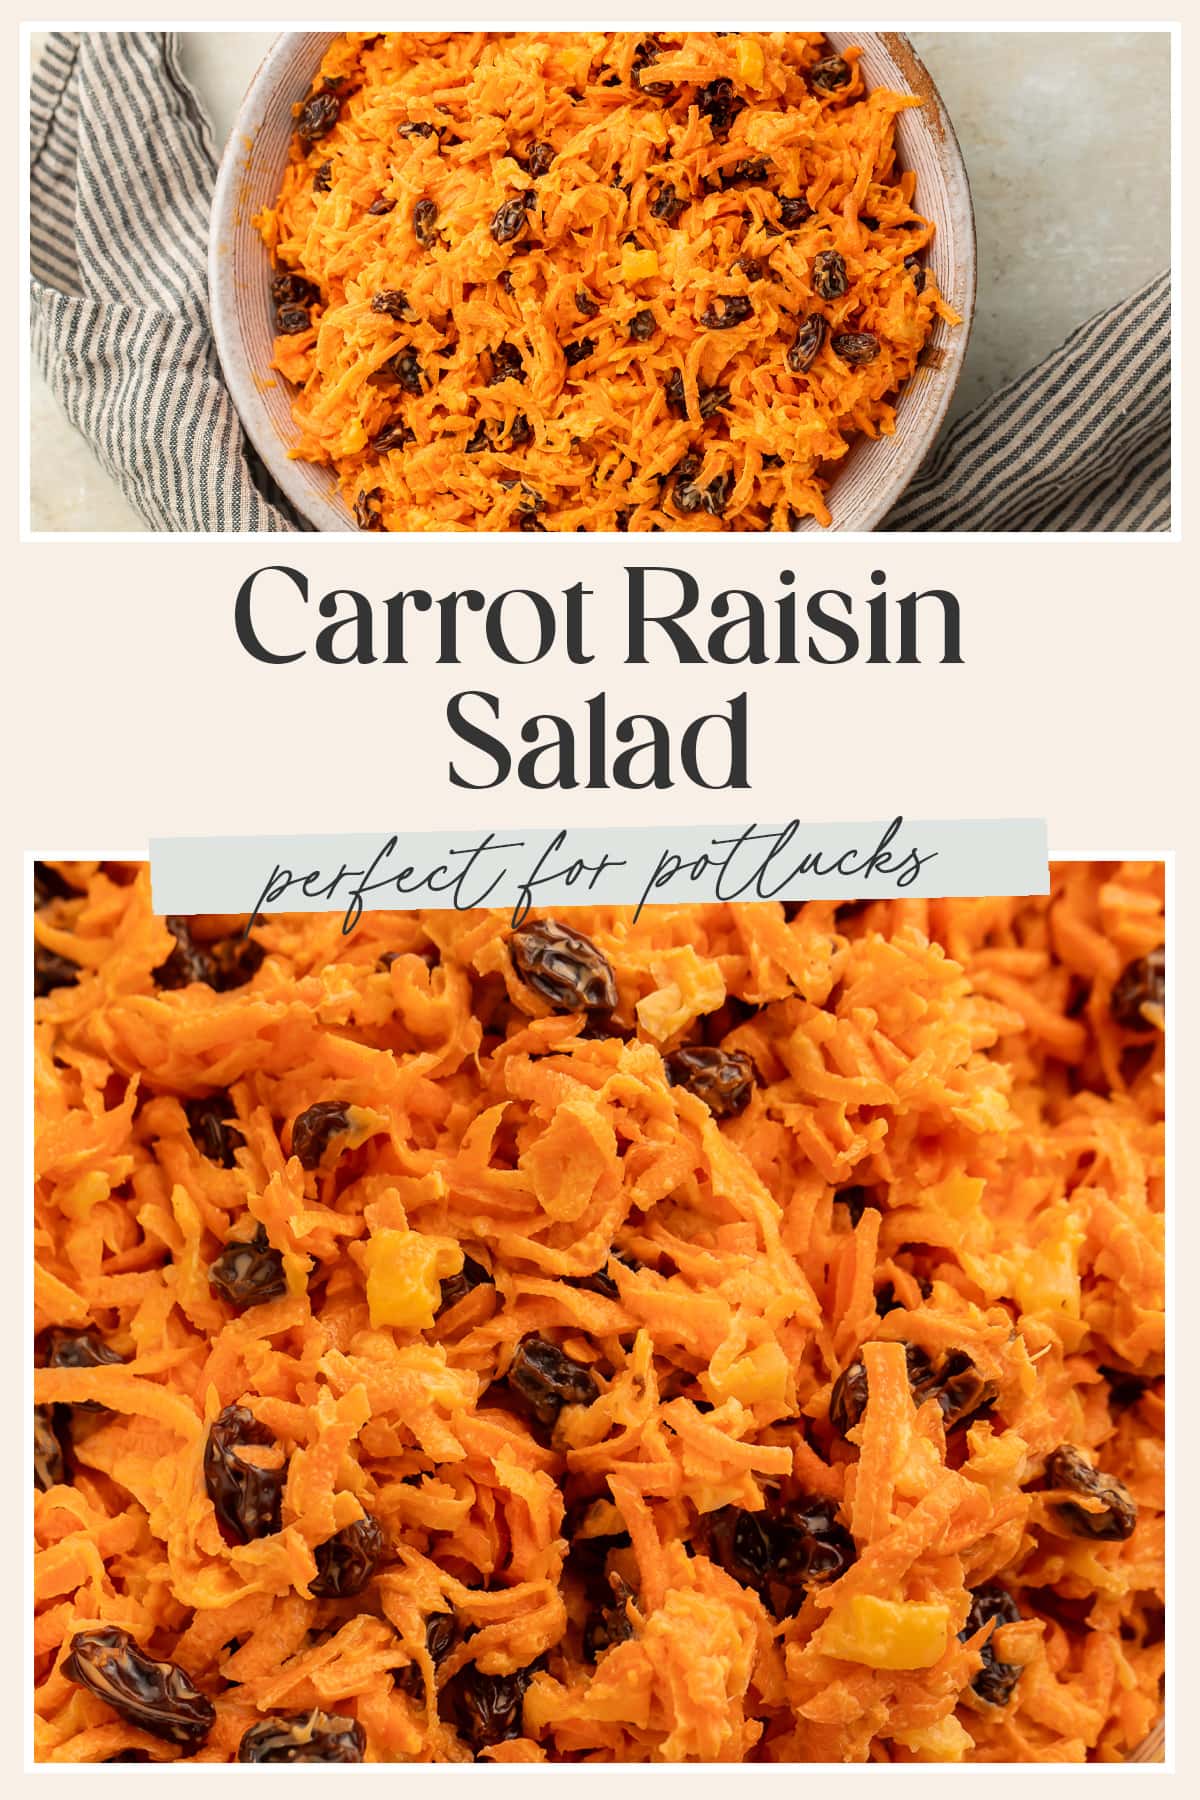 Pin graphic for carrot raisin salad.